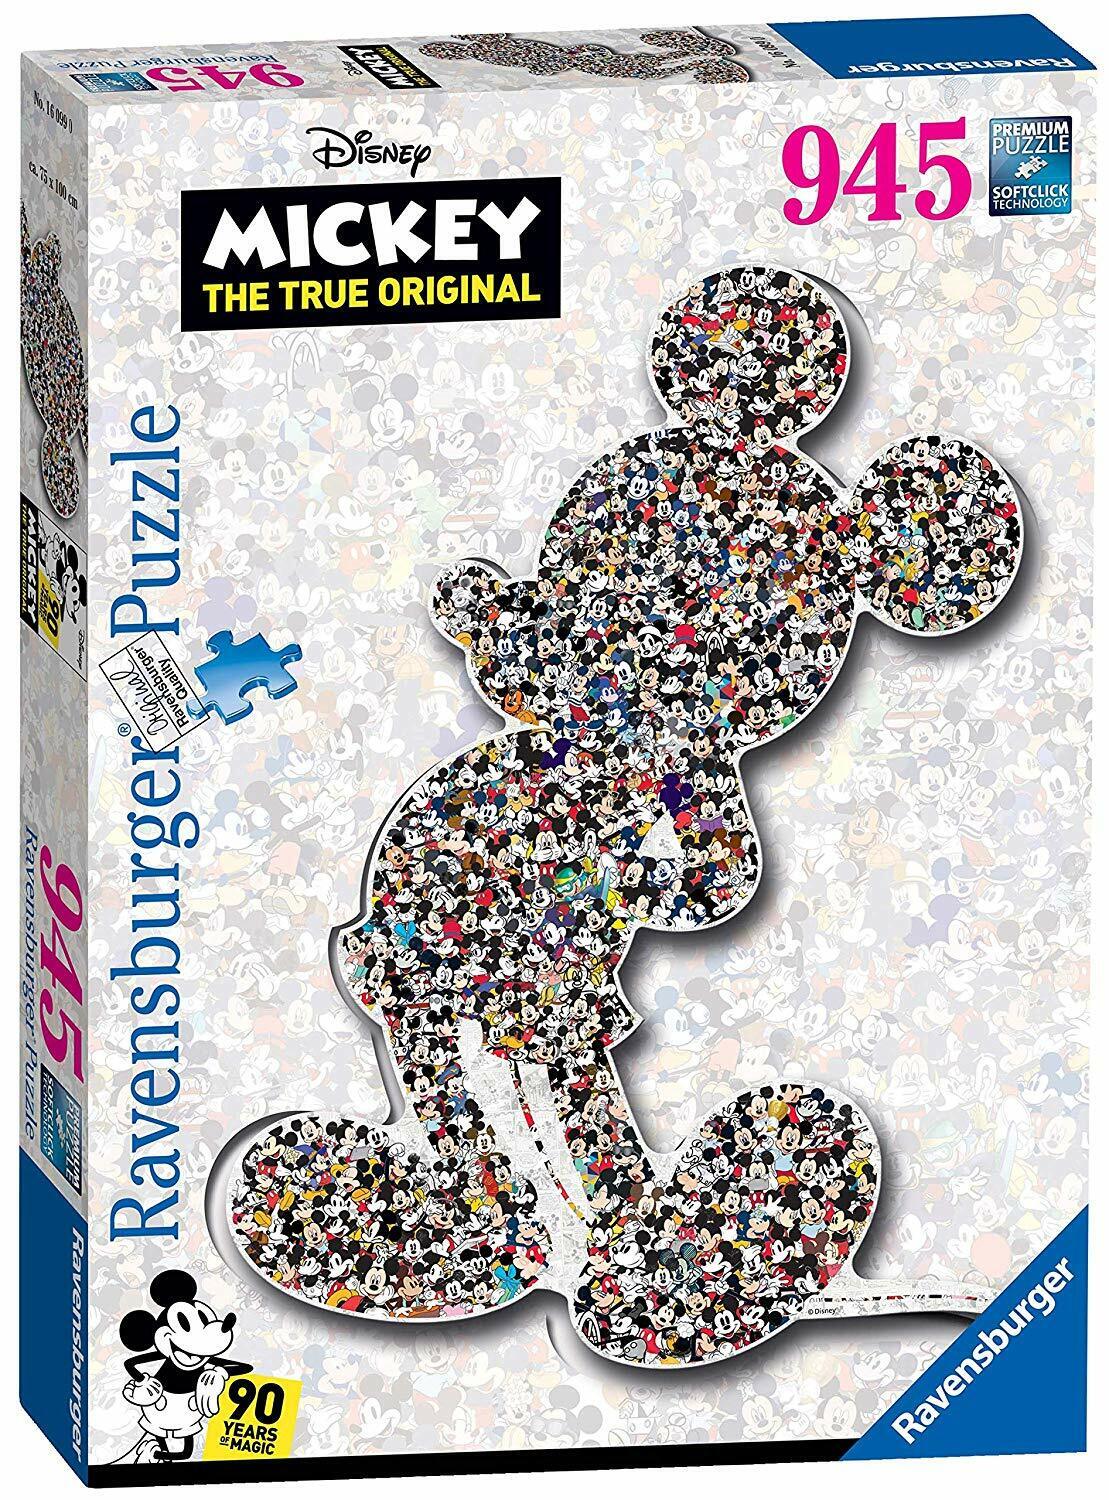 Ravensburger - Disney Mickey Mouse Shaped jigsaws 945 pcs